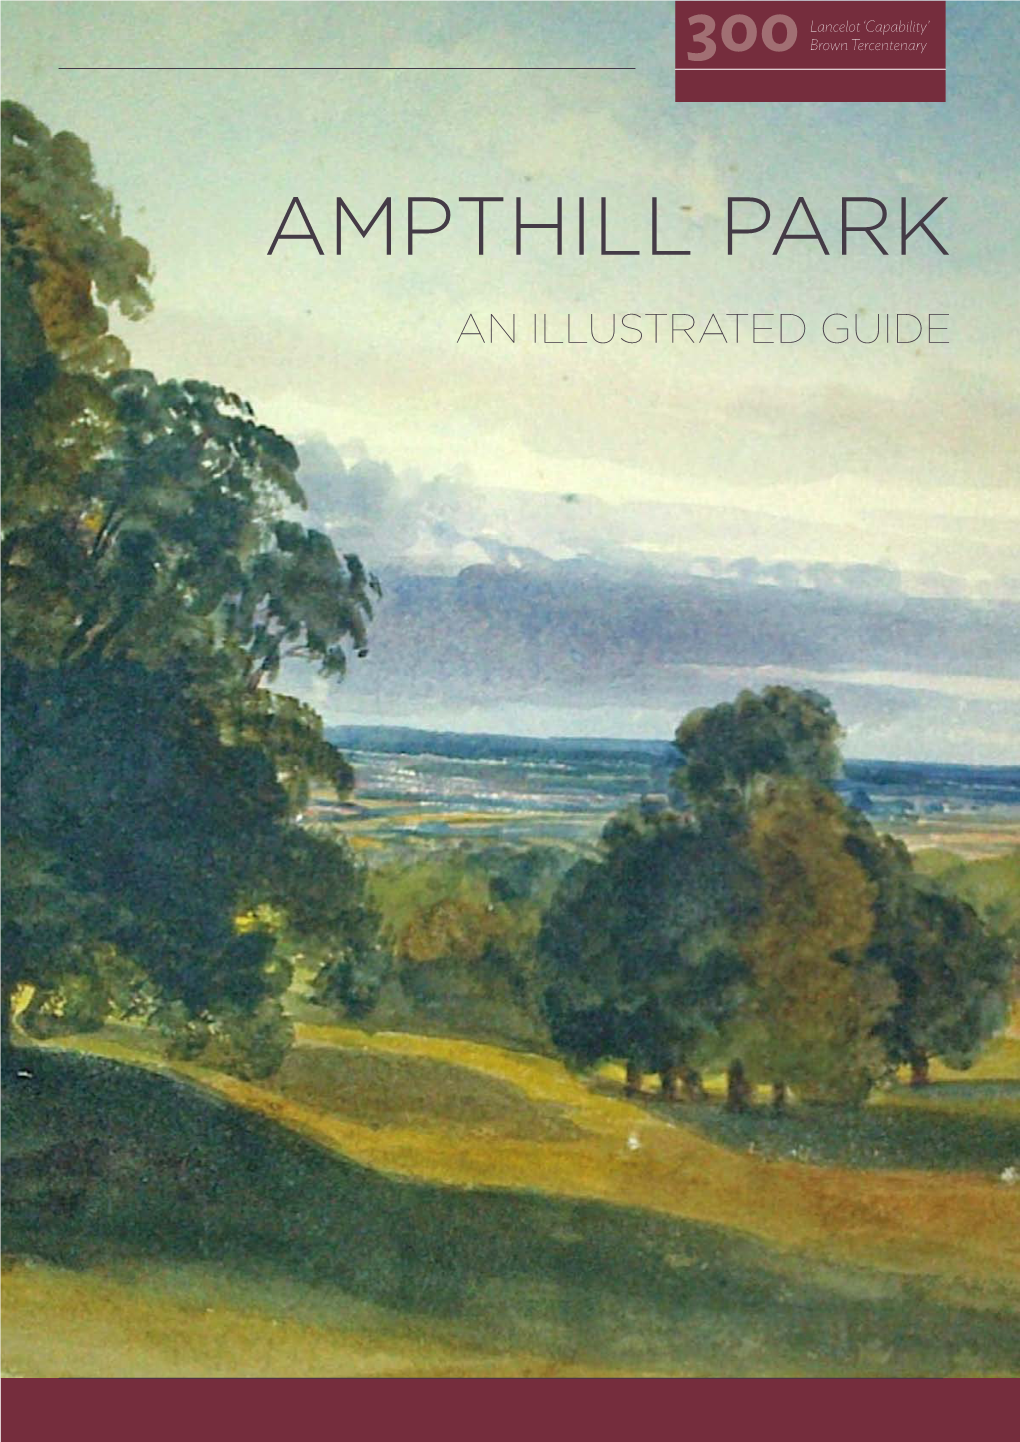 Ampthill Park an Illustrated Guide Lancelot ‘Capability’ 300 Brown Tercentenary Ampthill Park 3